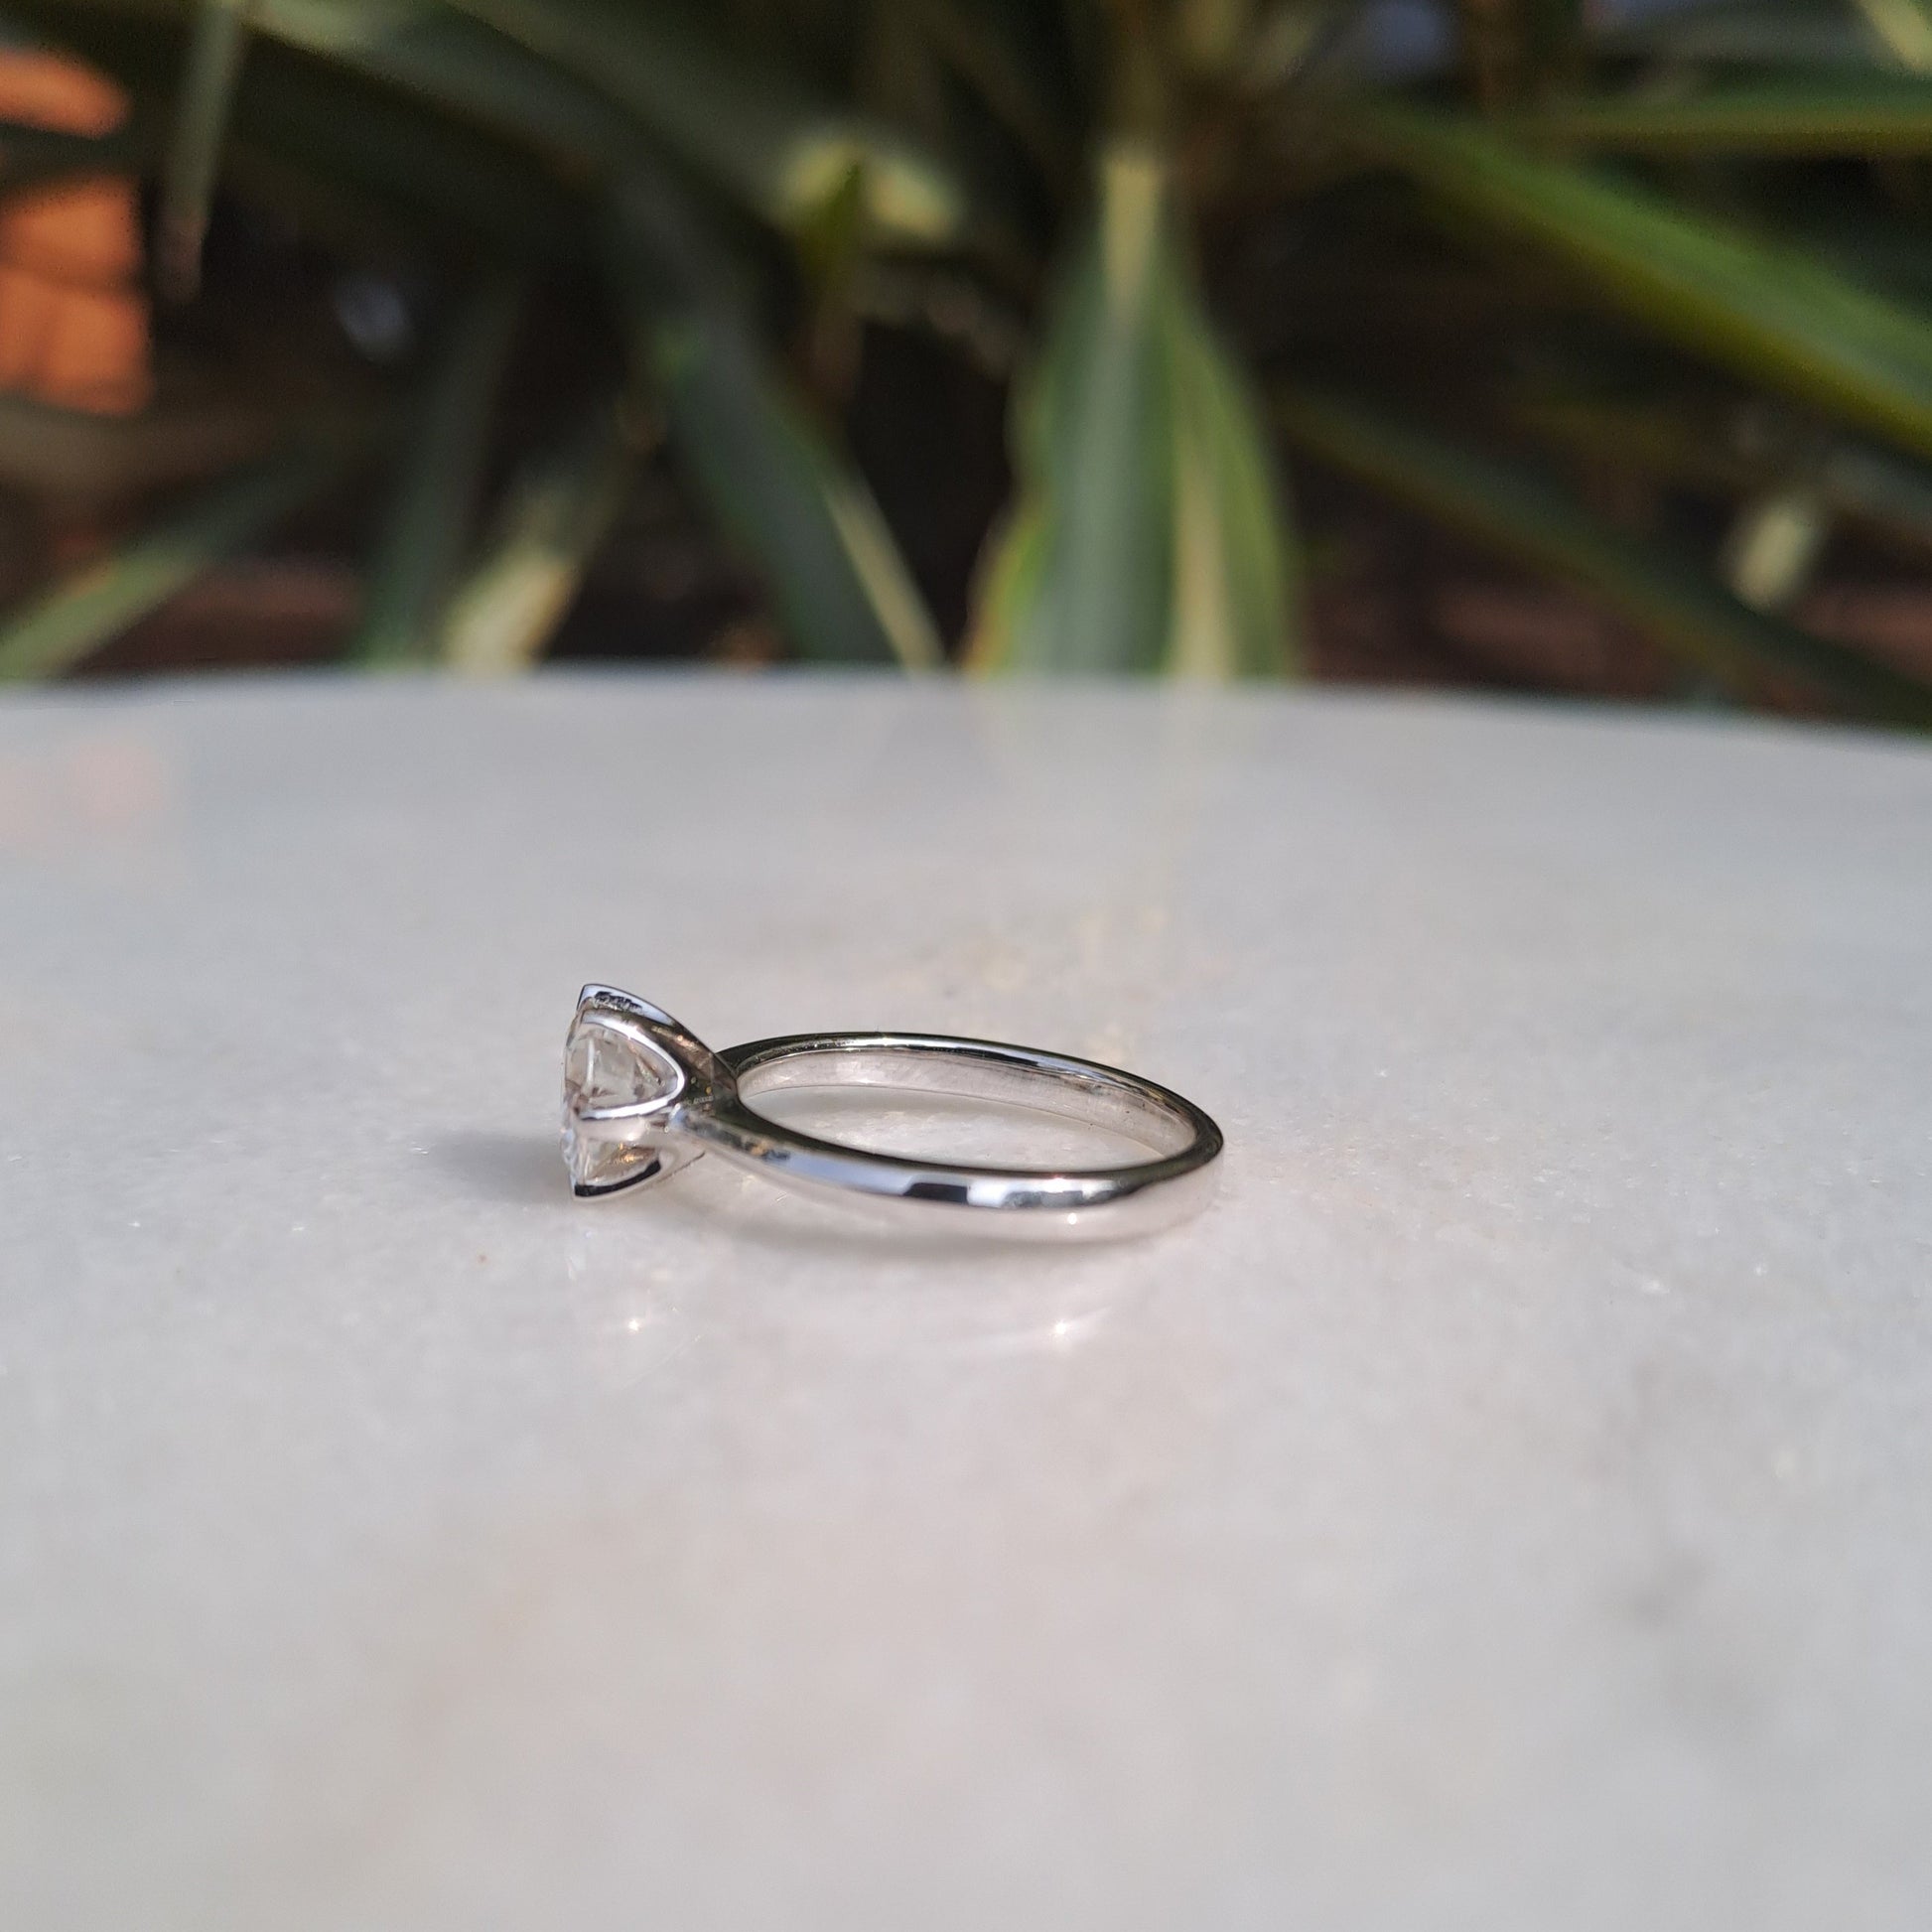 The Selma Ring (0.89 CT) Moissanite Diamond